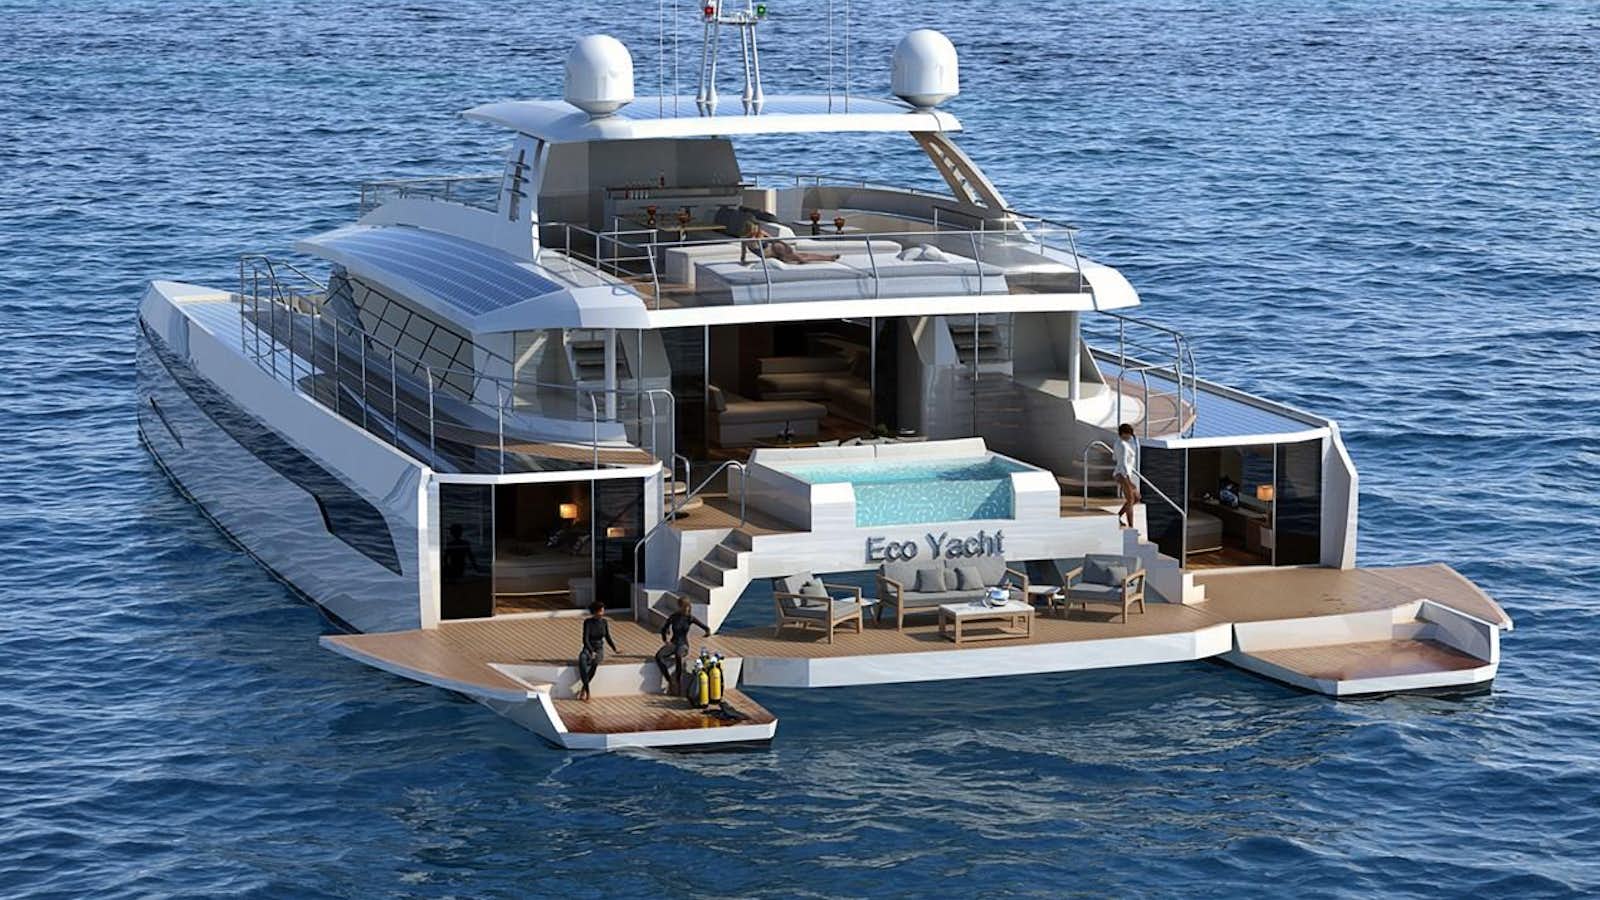 Eco yacht 115'
Yacht for Sale